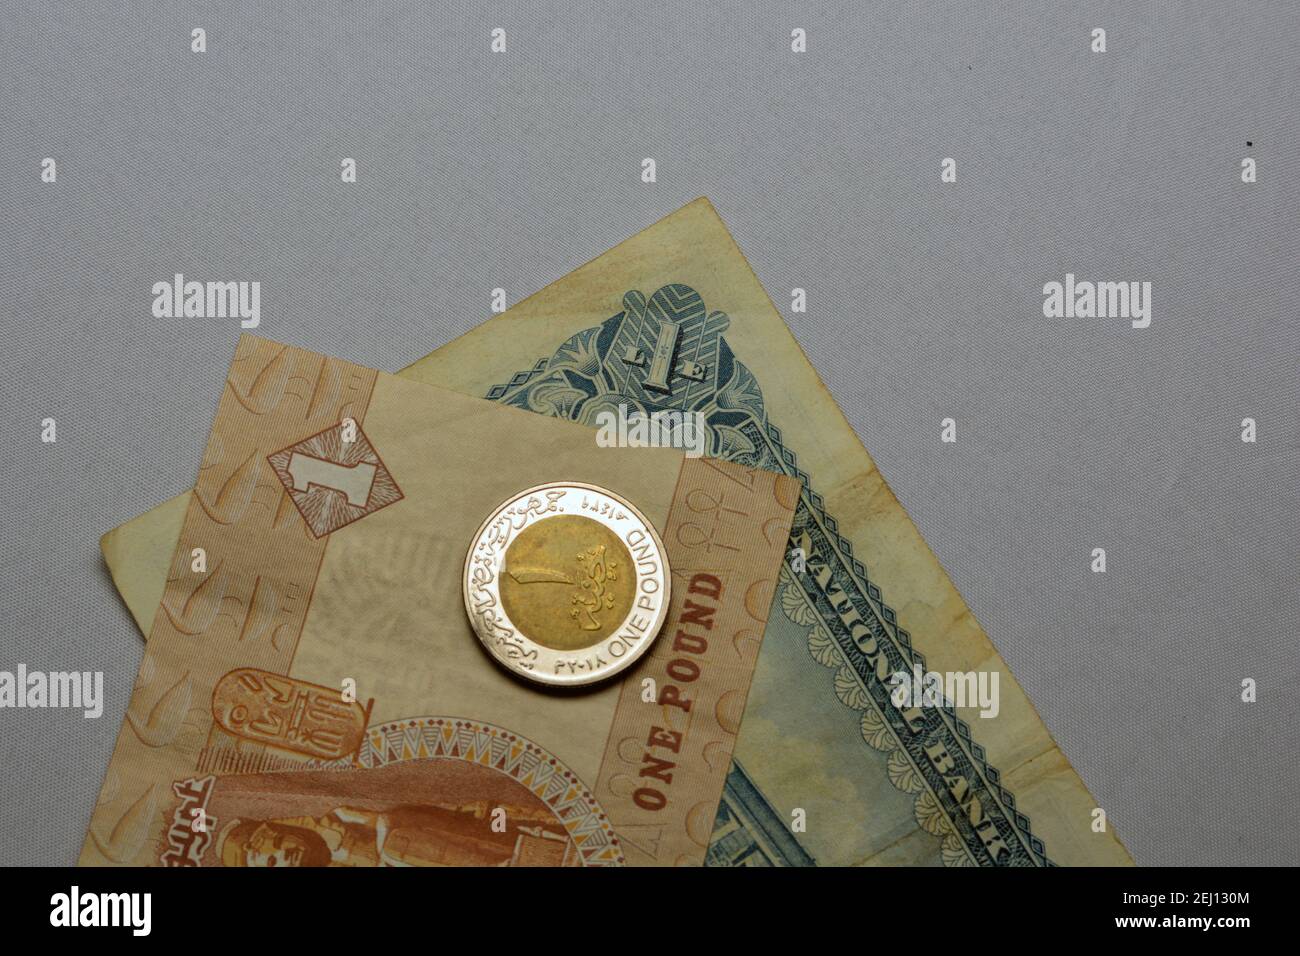 Banconota egiziana da 1 libbra 1956 , 2016 banconote e 1 moneta LE . vecchia banconota egiziana da 1 libbra , una nuova banconota egiziana da 1 libbra e moneta Foto Stock